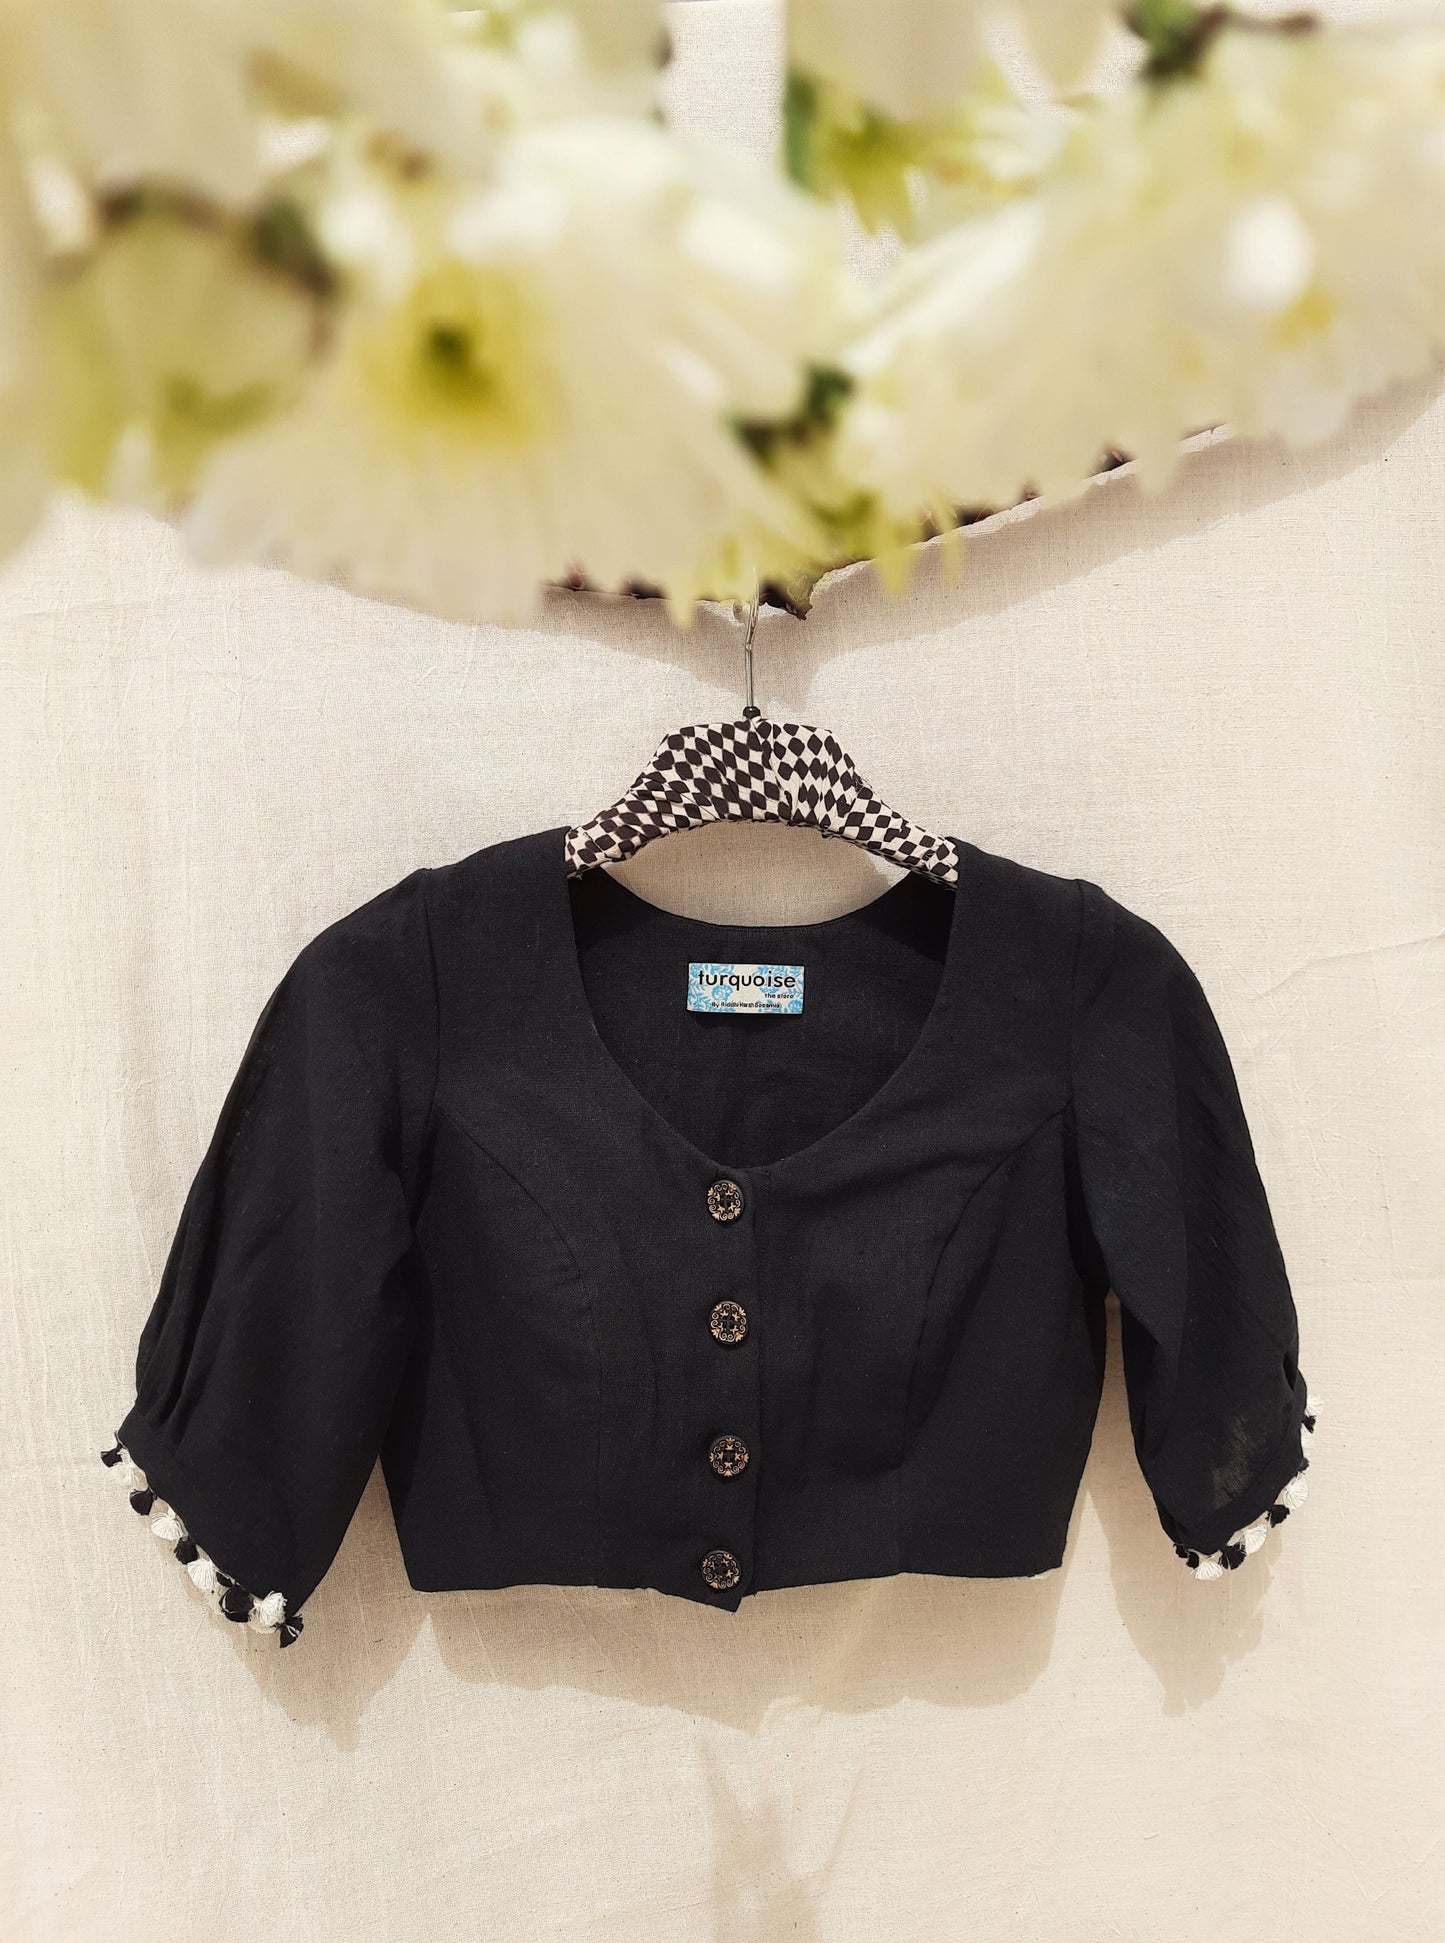 Black handwoven organic cotton blouse, Natural dyed hand spun handwoven organic cotton blouse in black color, Slow fashion